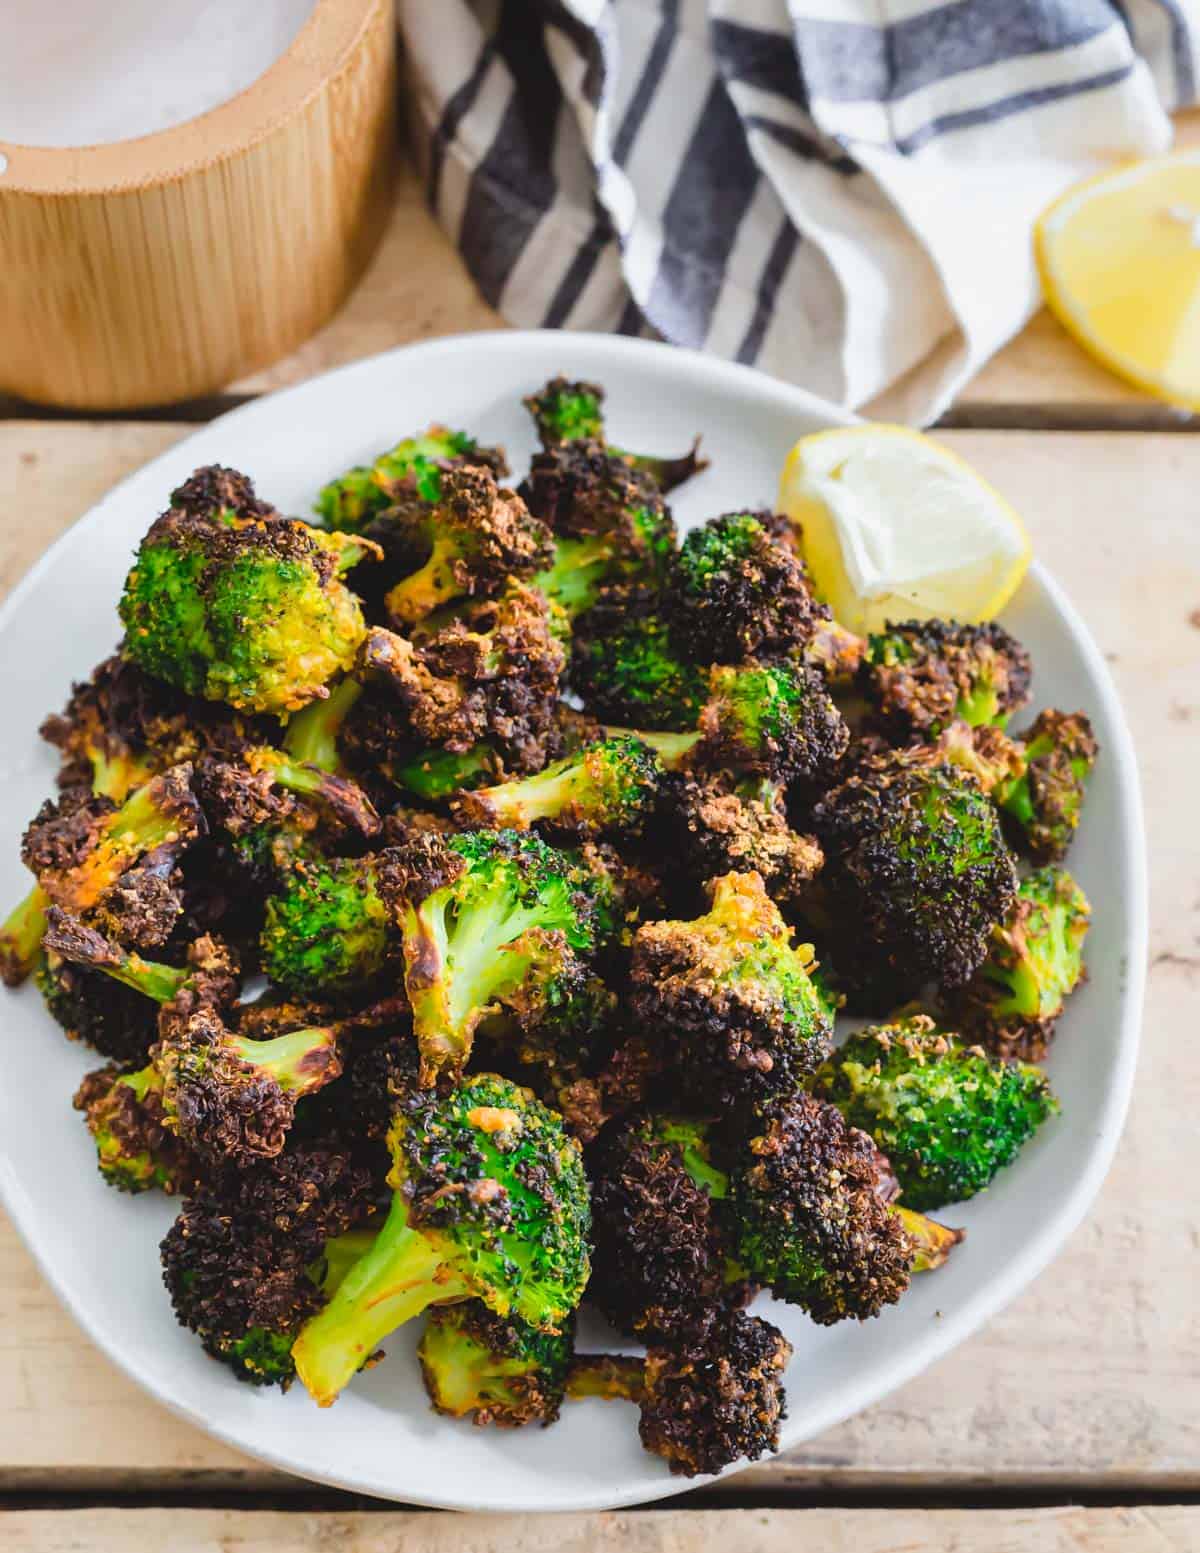 Crispy air fryer frozen broccoli.